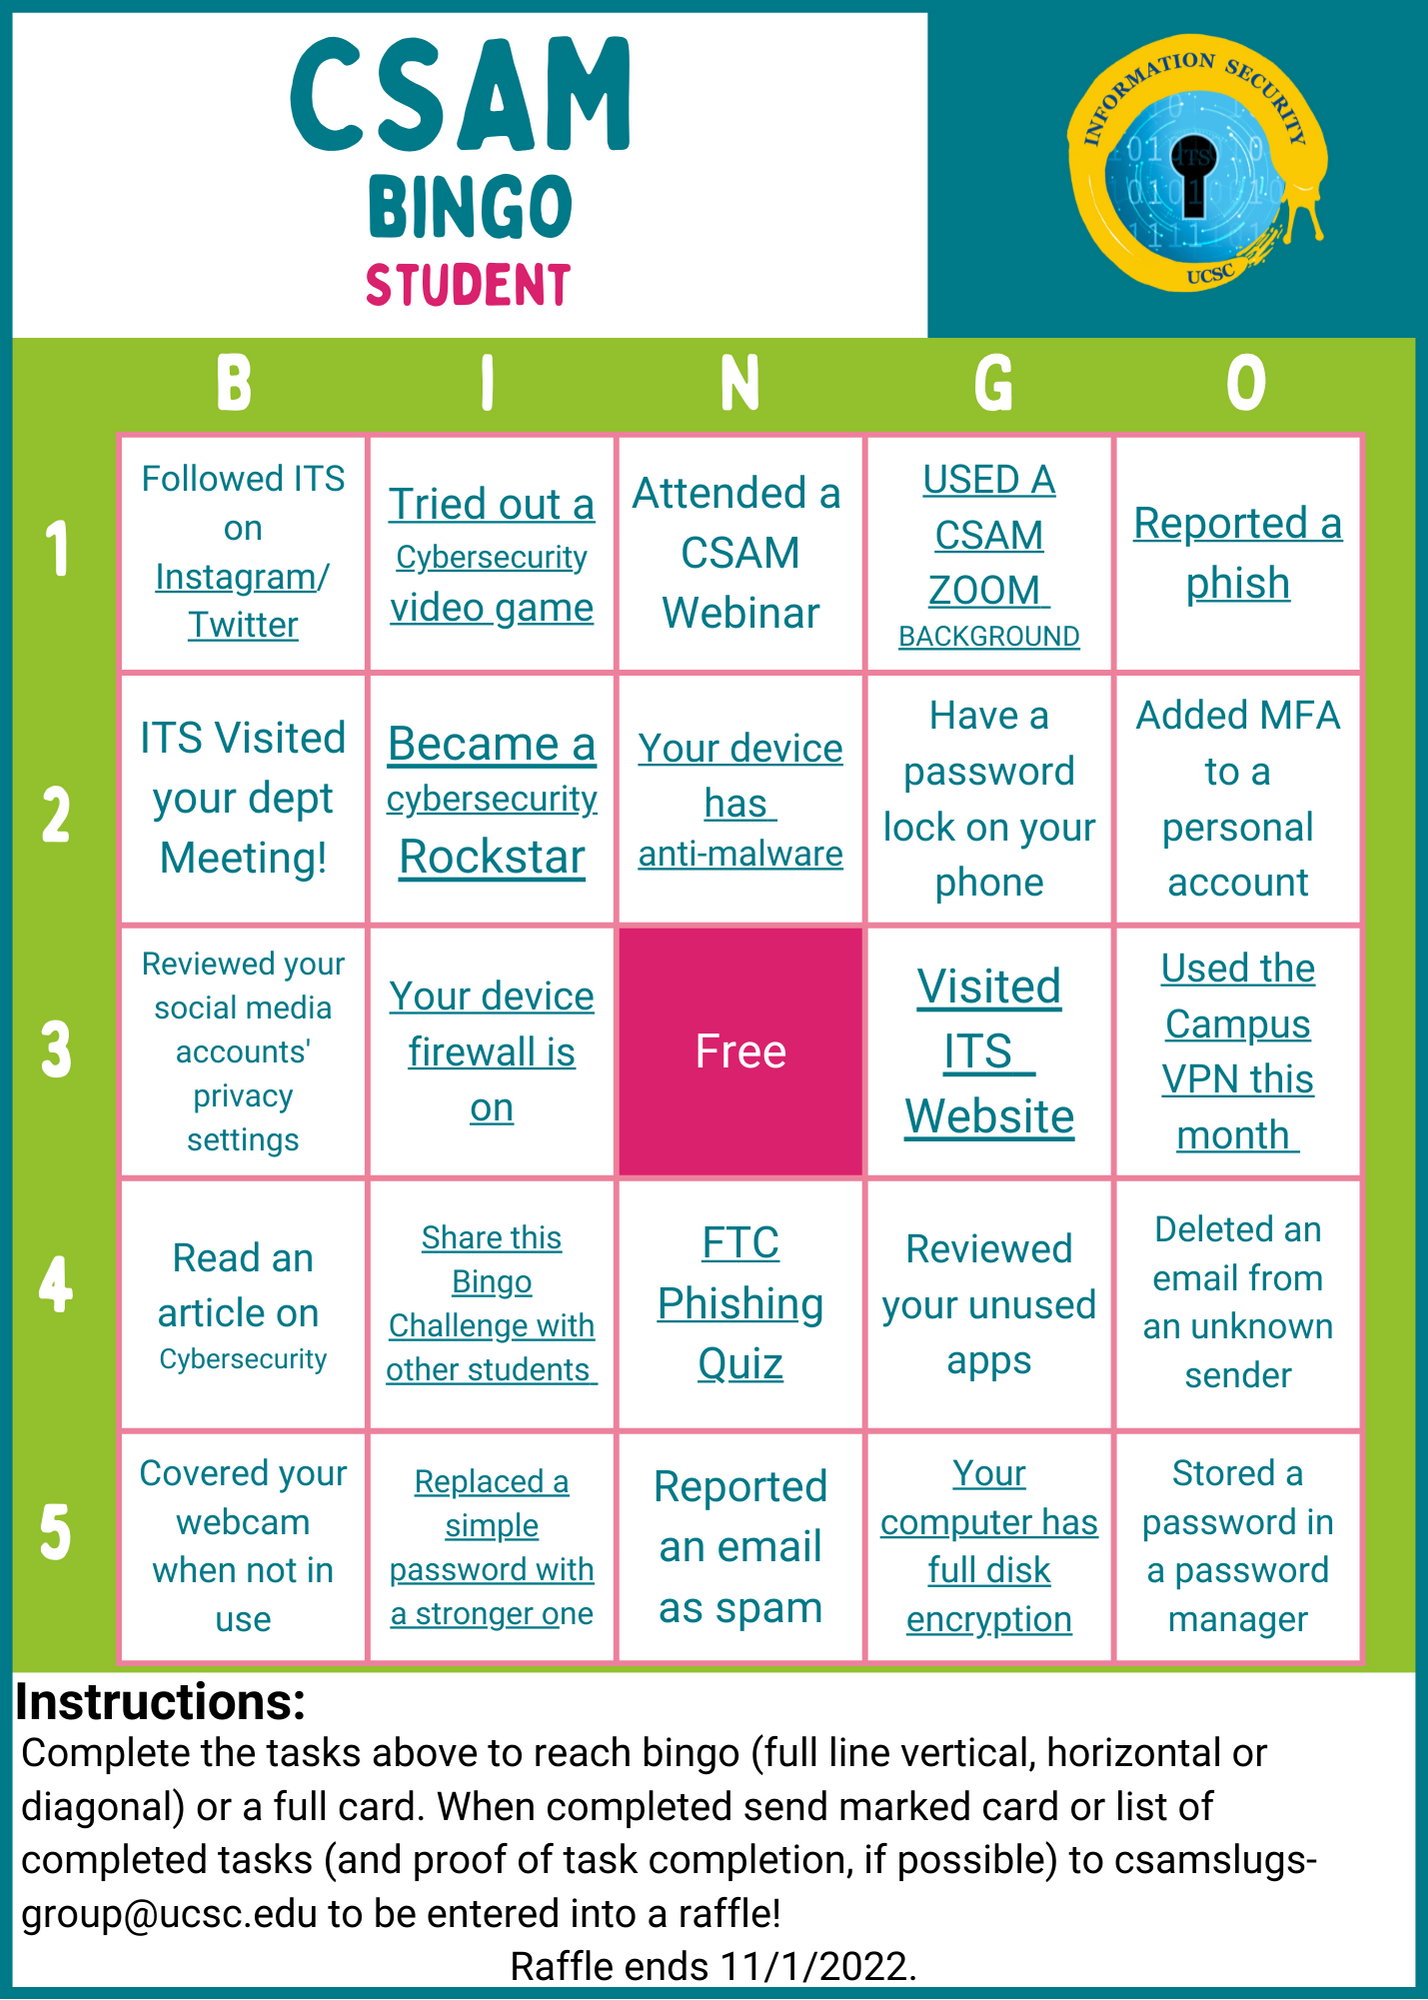 bingo-card-student.png